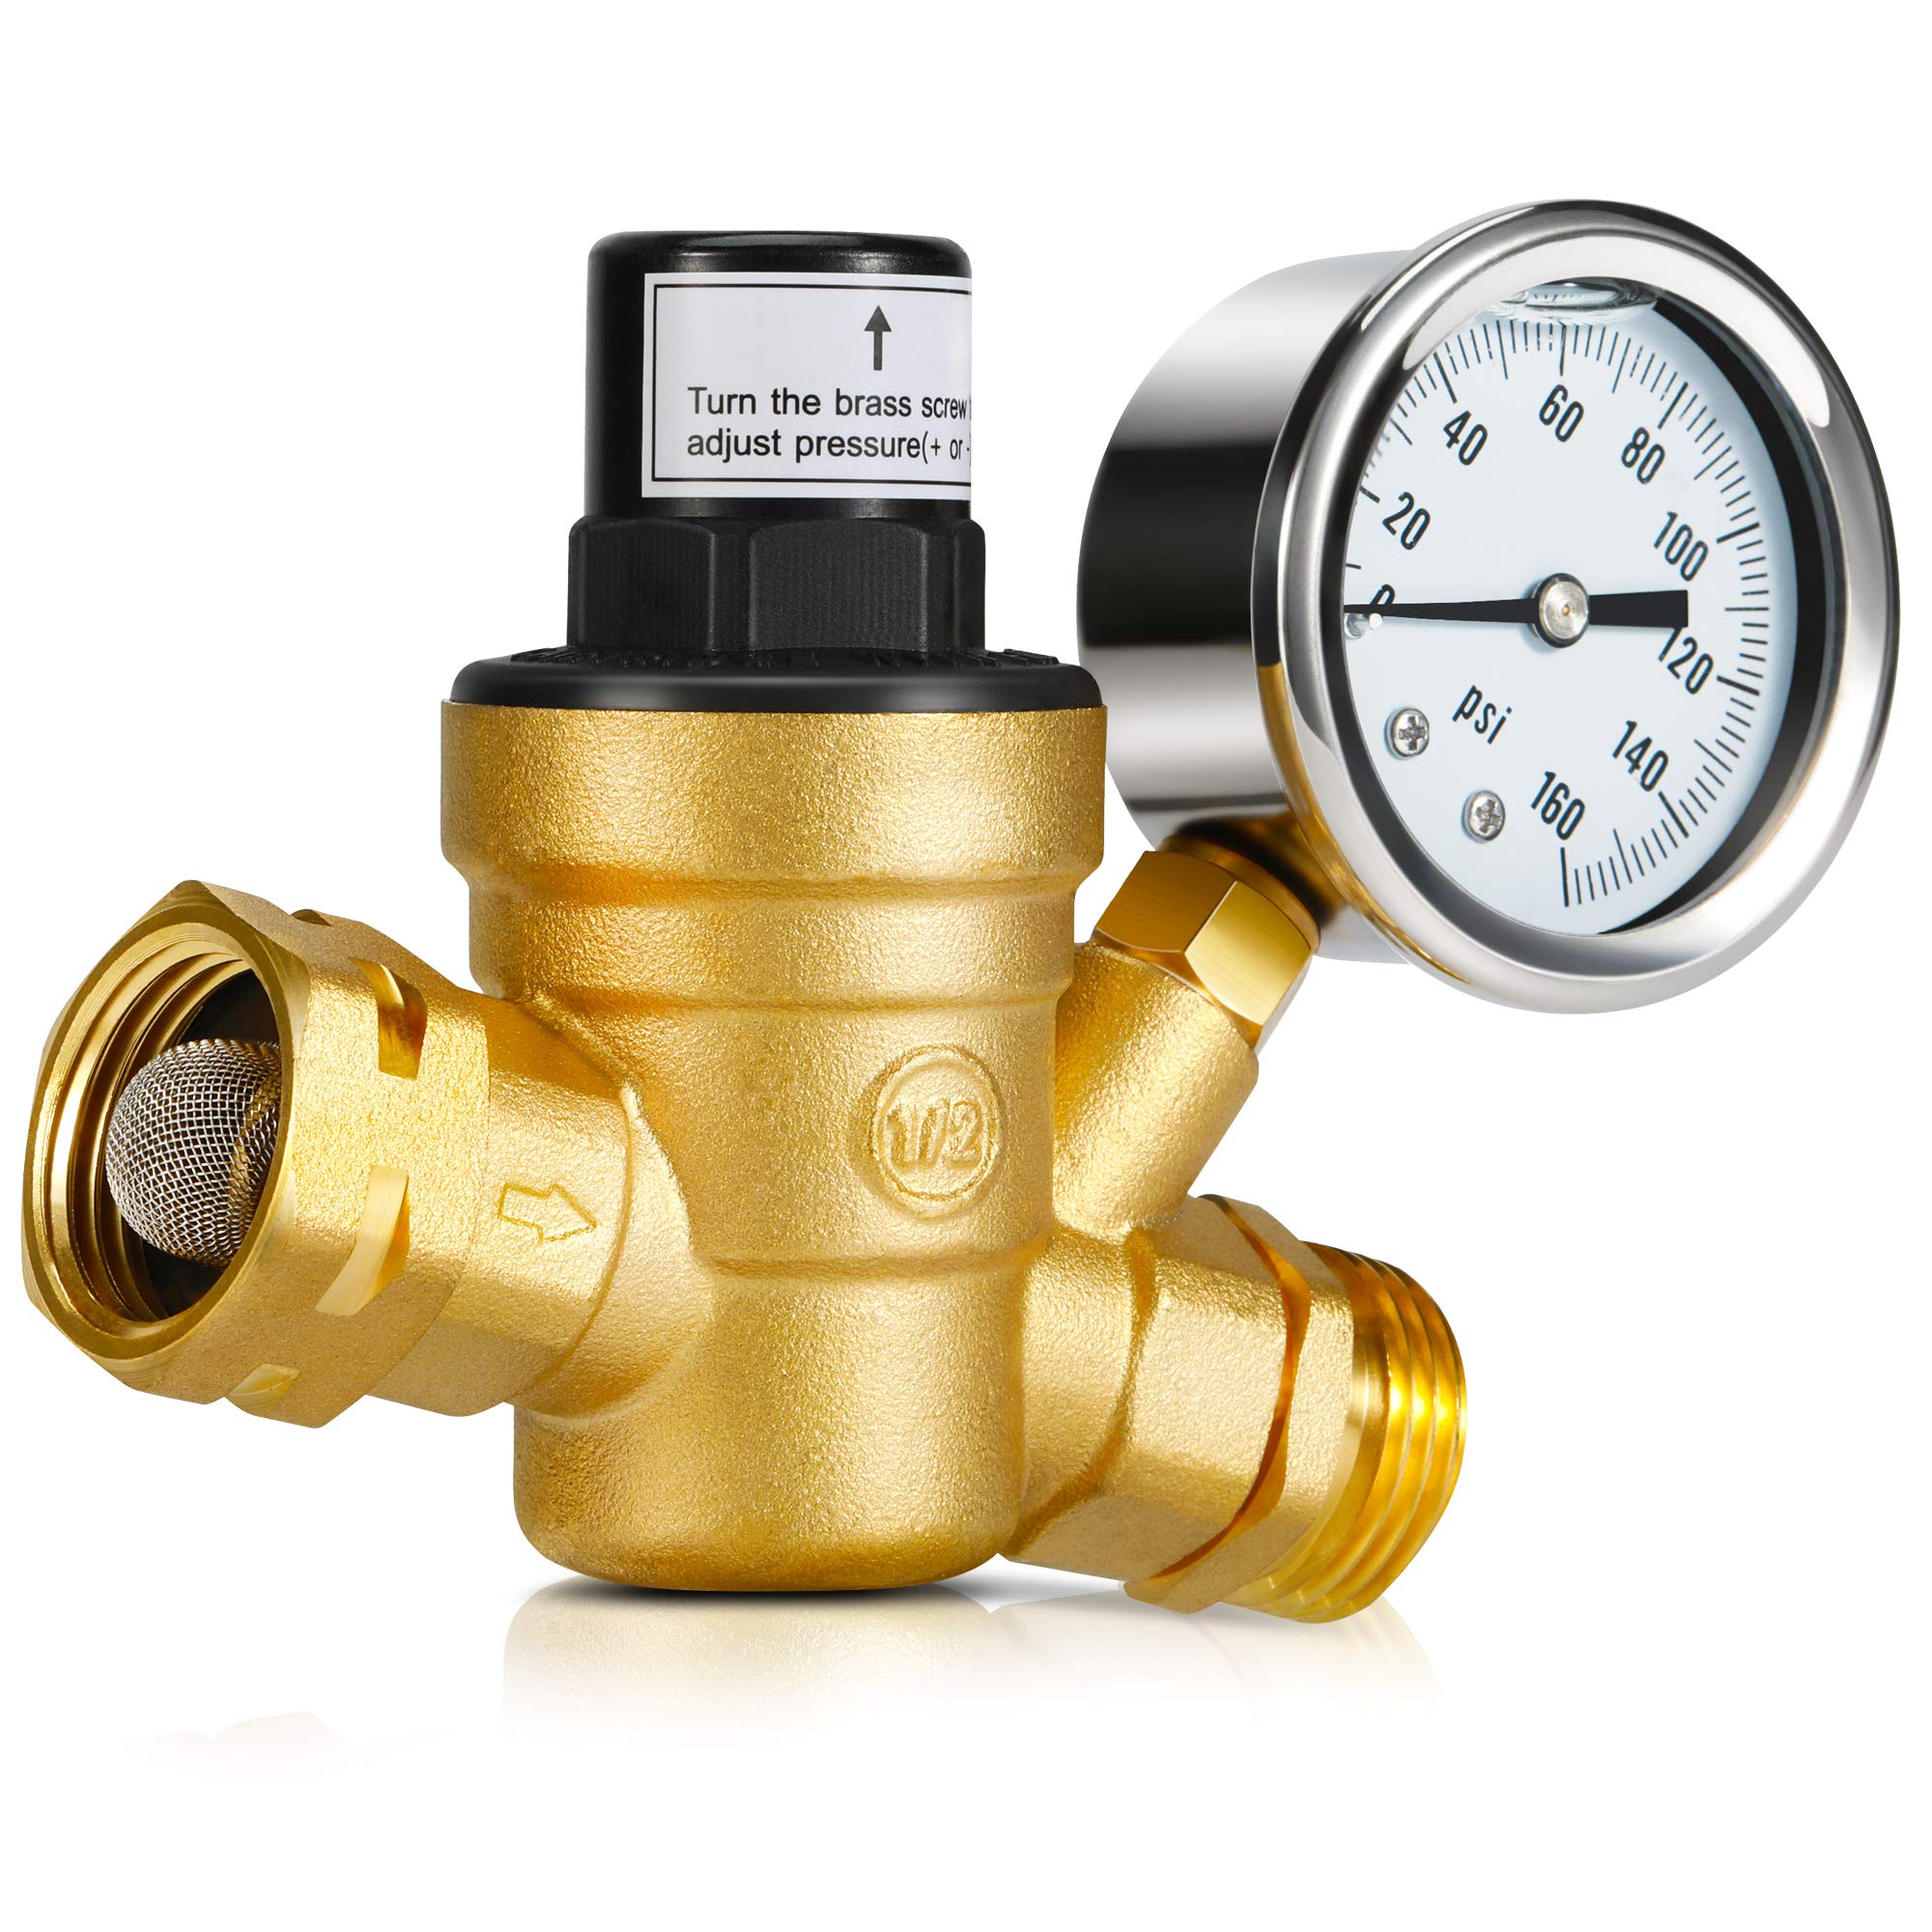 Kohree RV Brass Water Pressure Regulator with Gauge